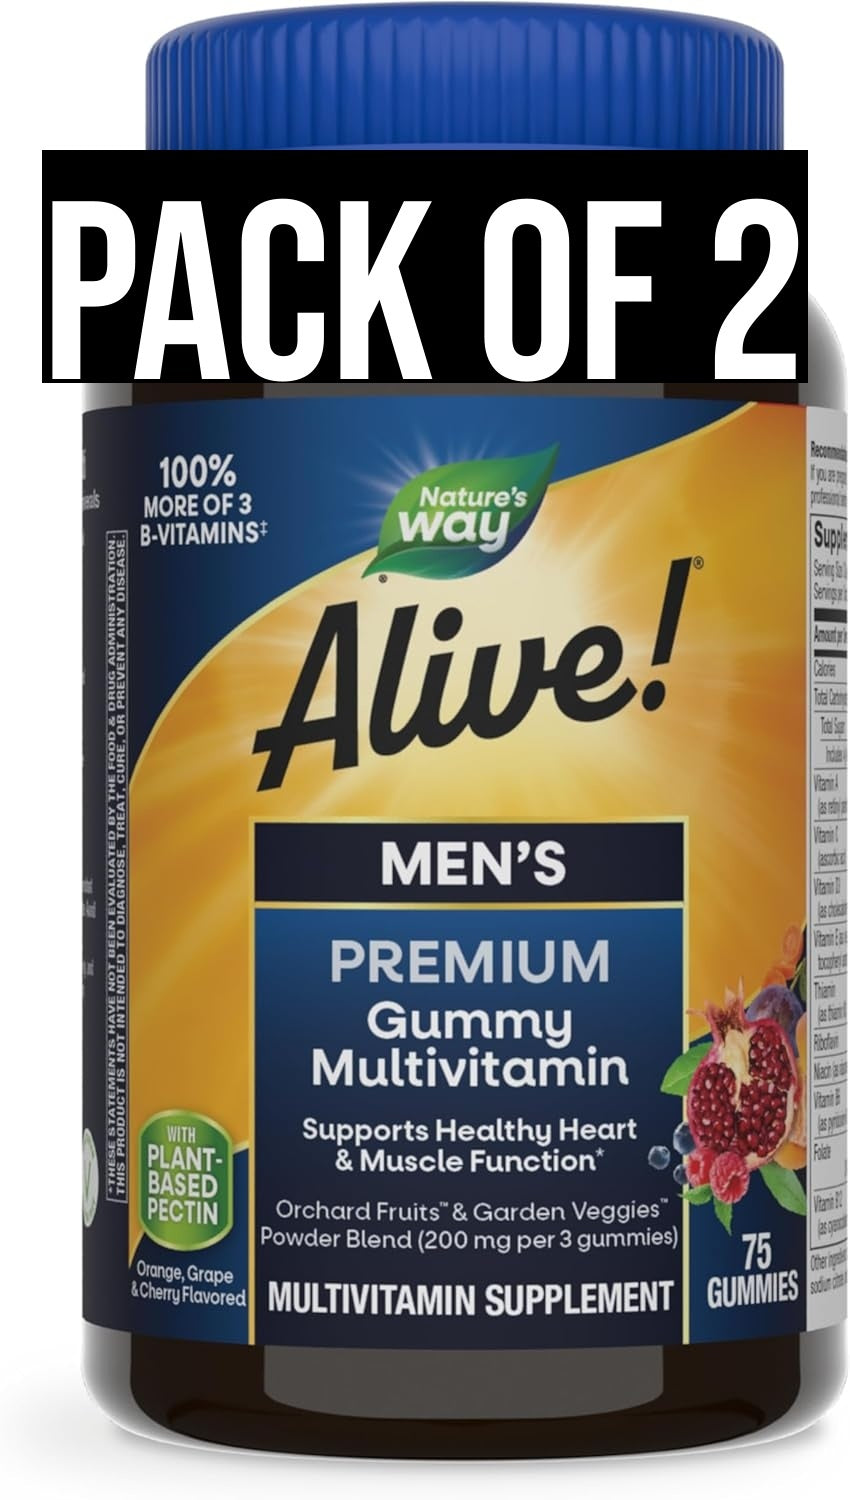 Nature's Way Alive! Premium Men’s Gummy Multivitamins